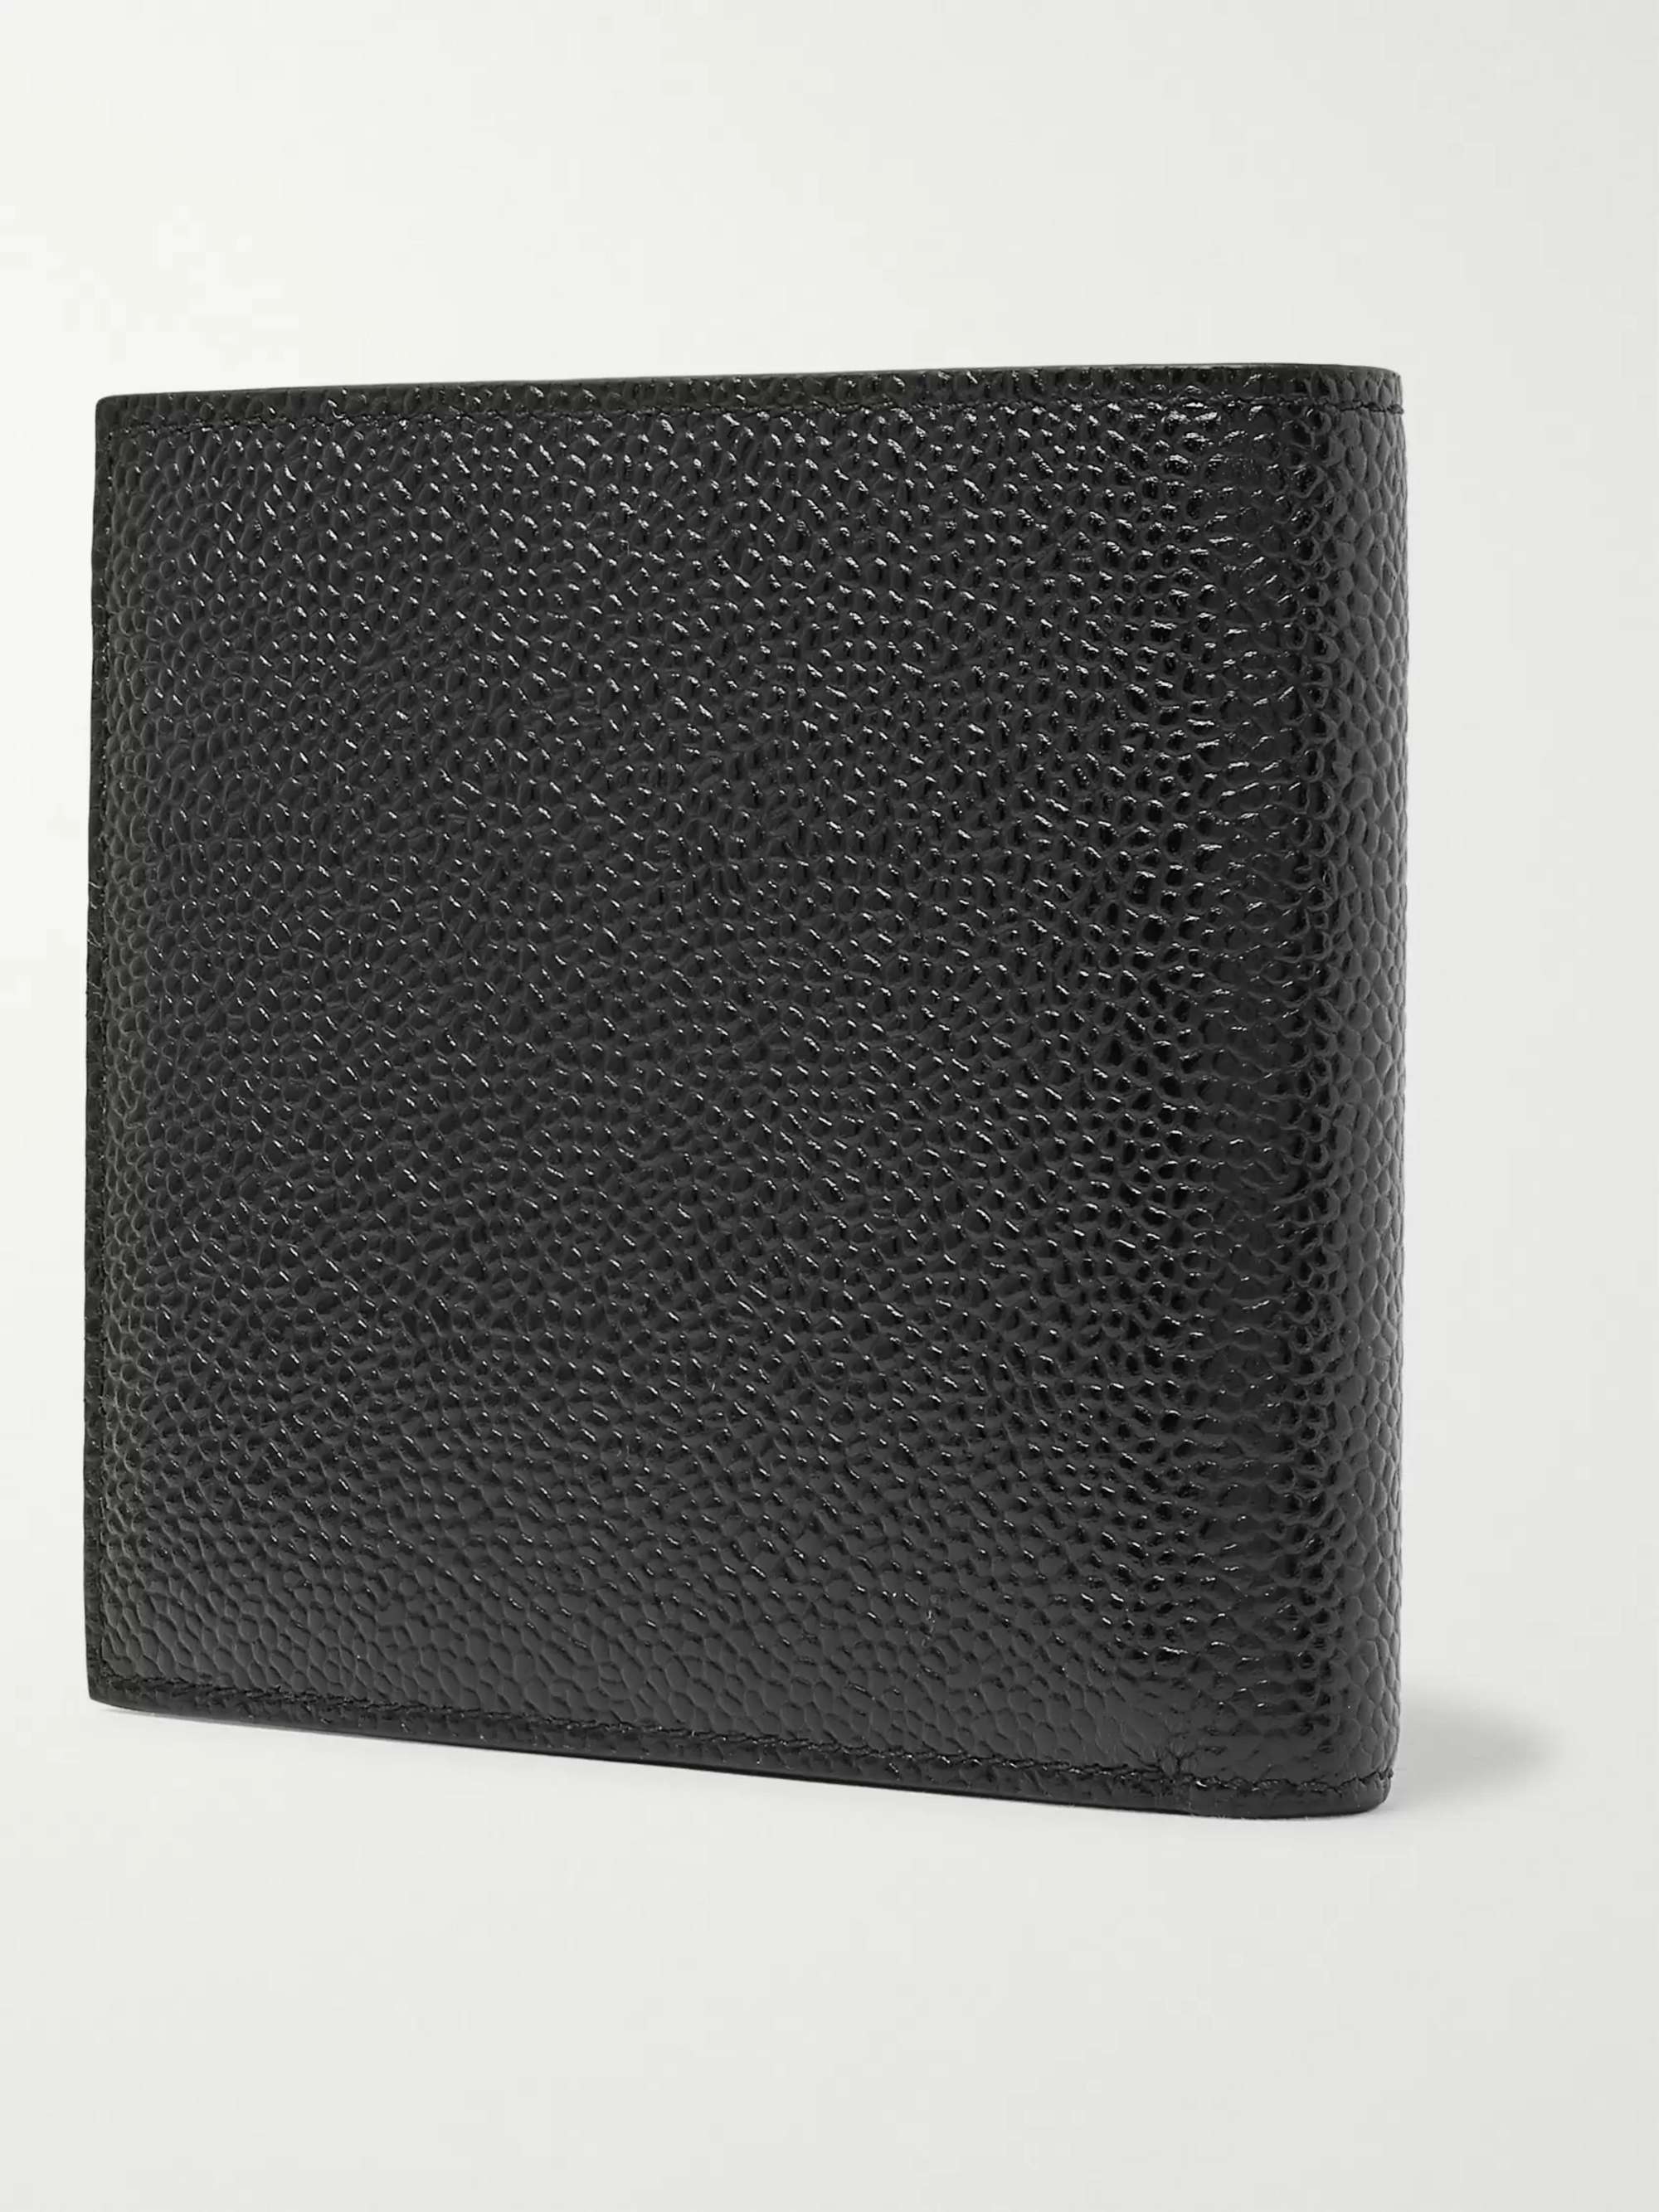 THOM BROWNE Pebble-Grain Leather Billfold Wallet